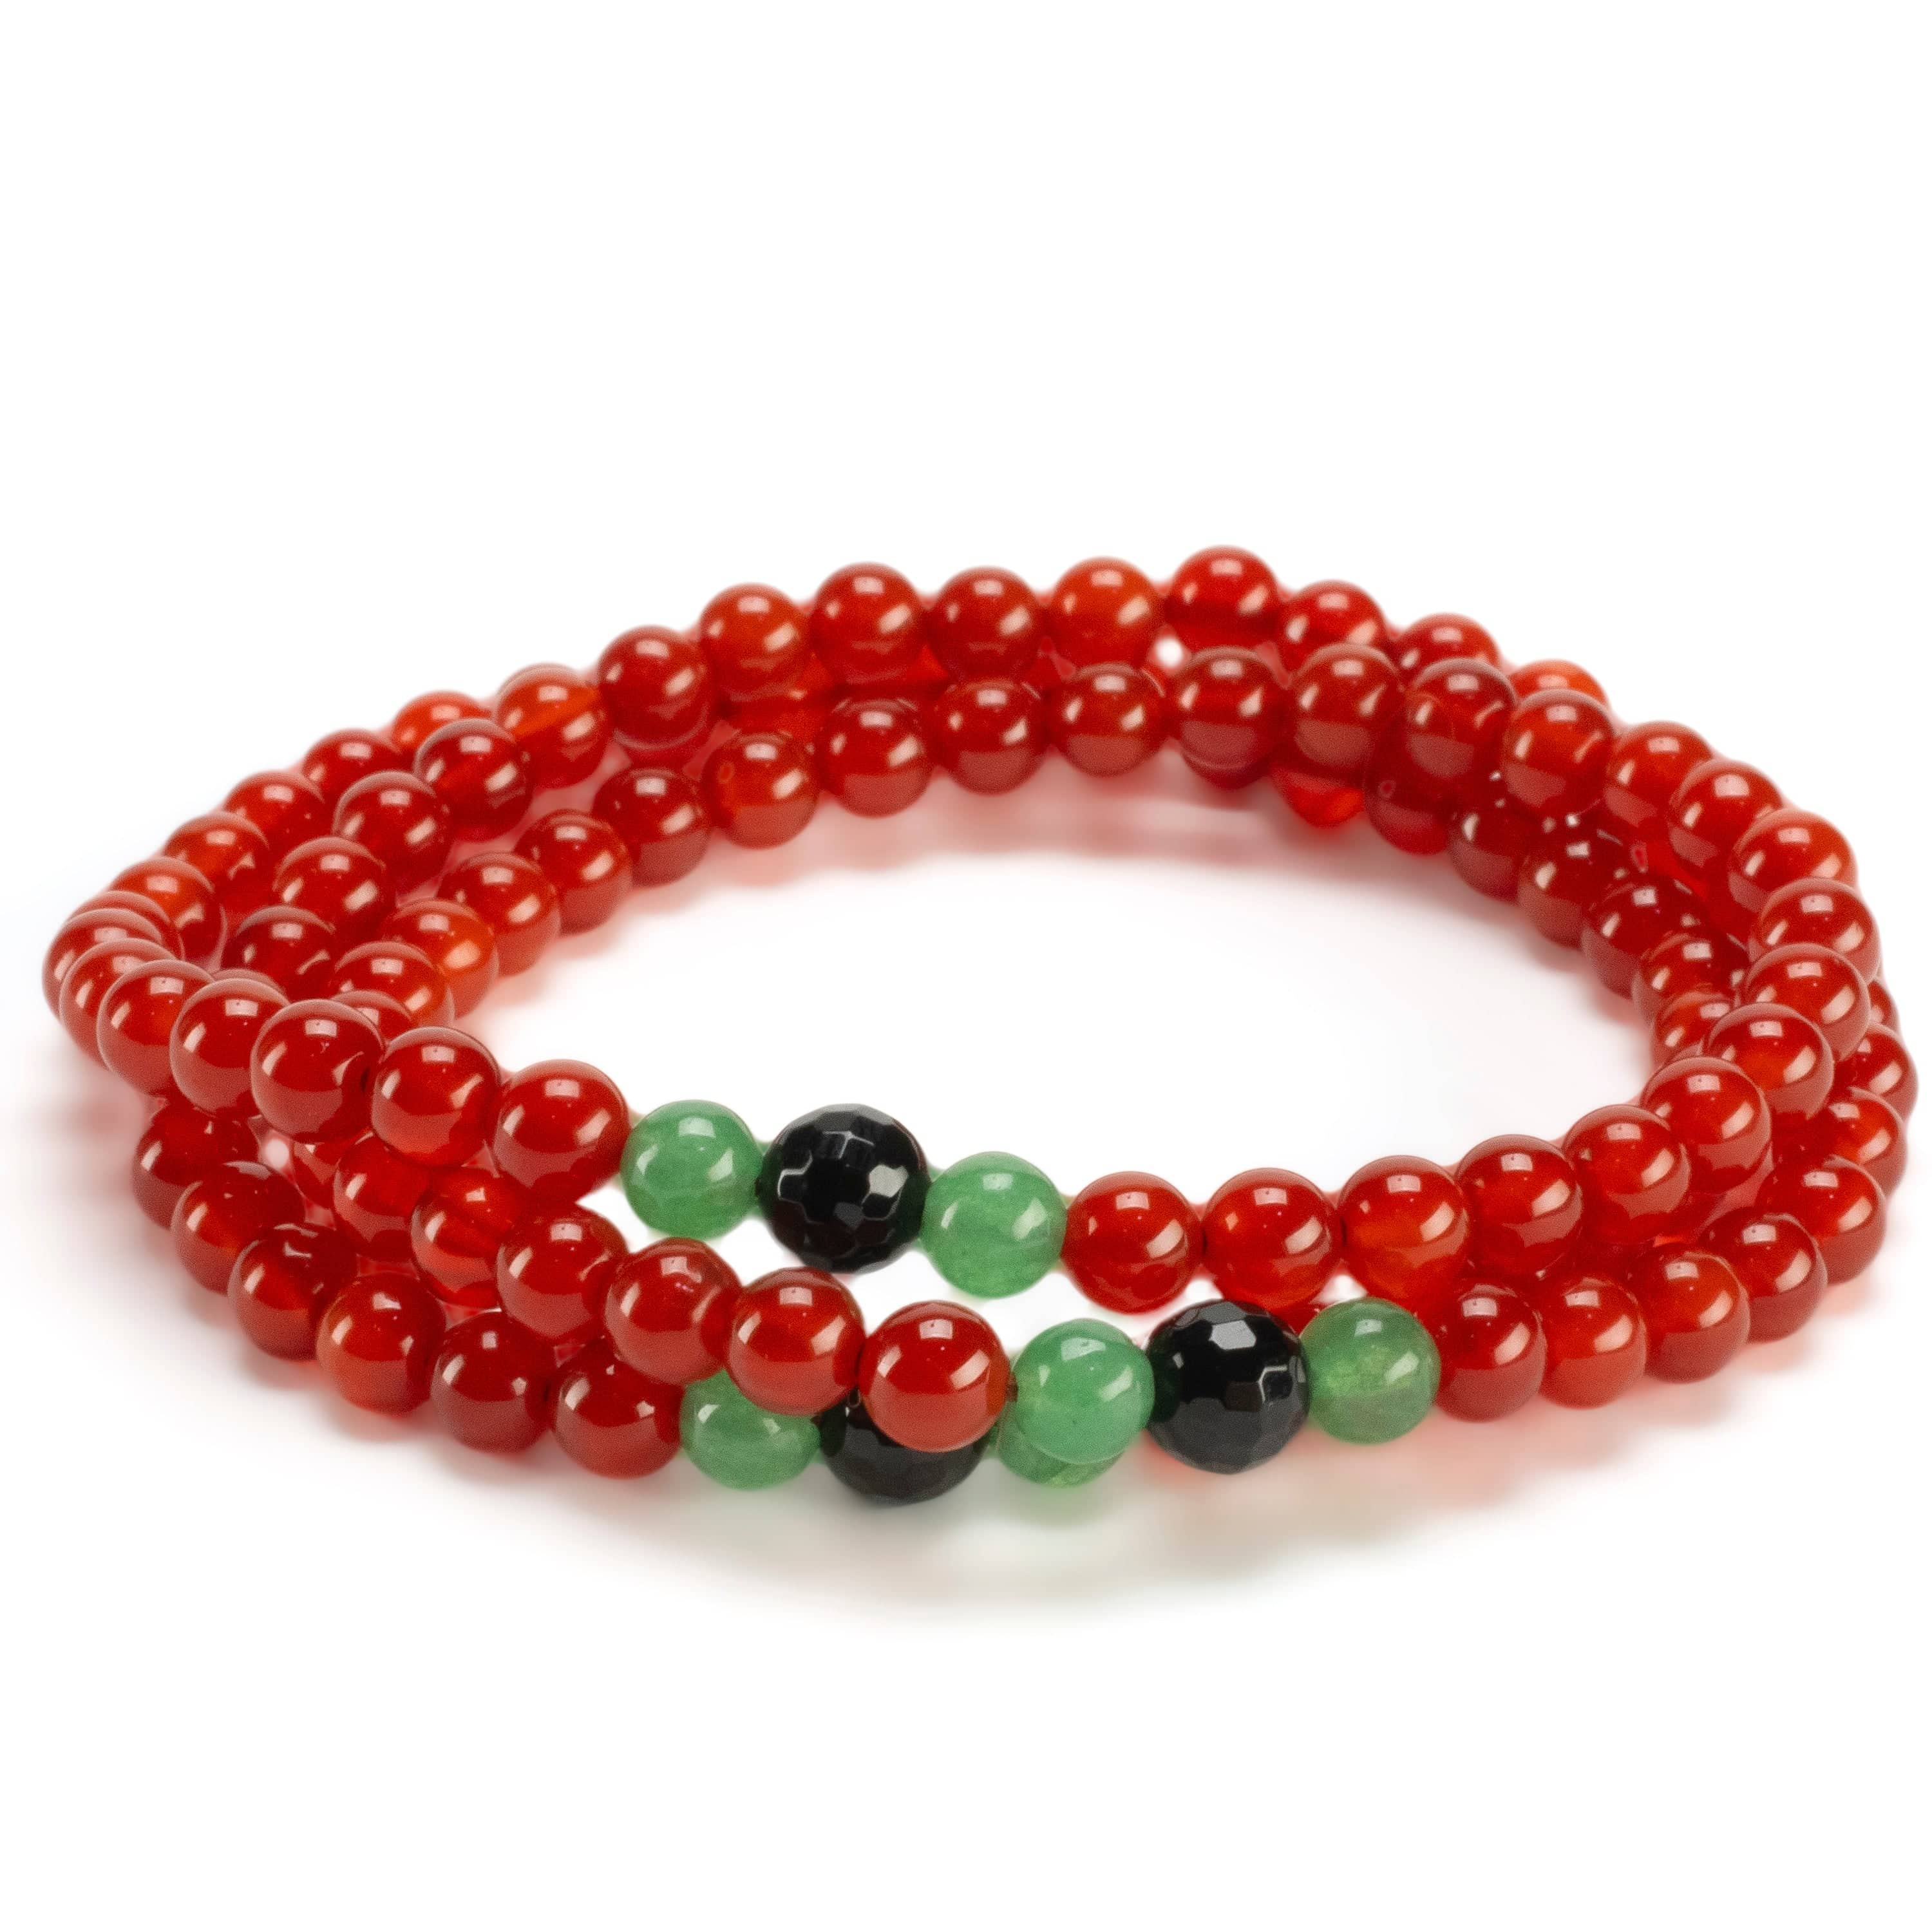 Kalifano Gemstone Bracelets Red Agate 6mm Beads with Aventurine & Black Agate Accent Beads Triple Wrap Gemstone Elastic Bracelet WHITE-BGI3-079